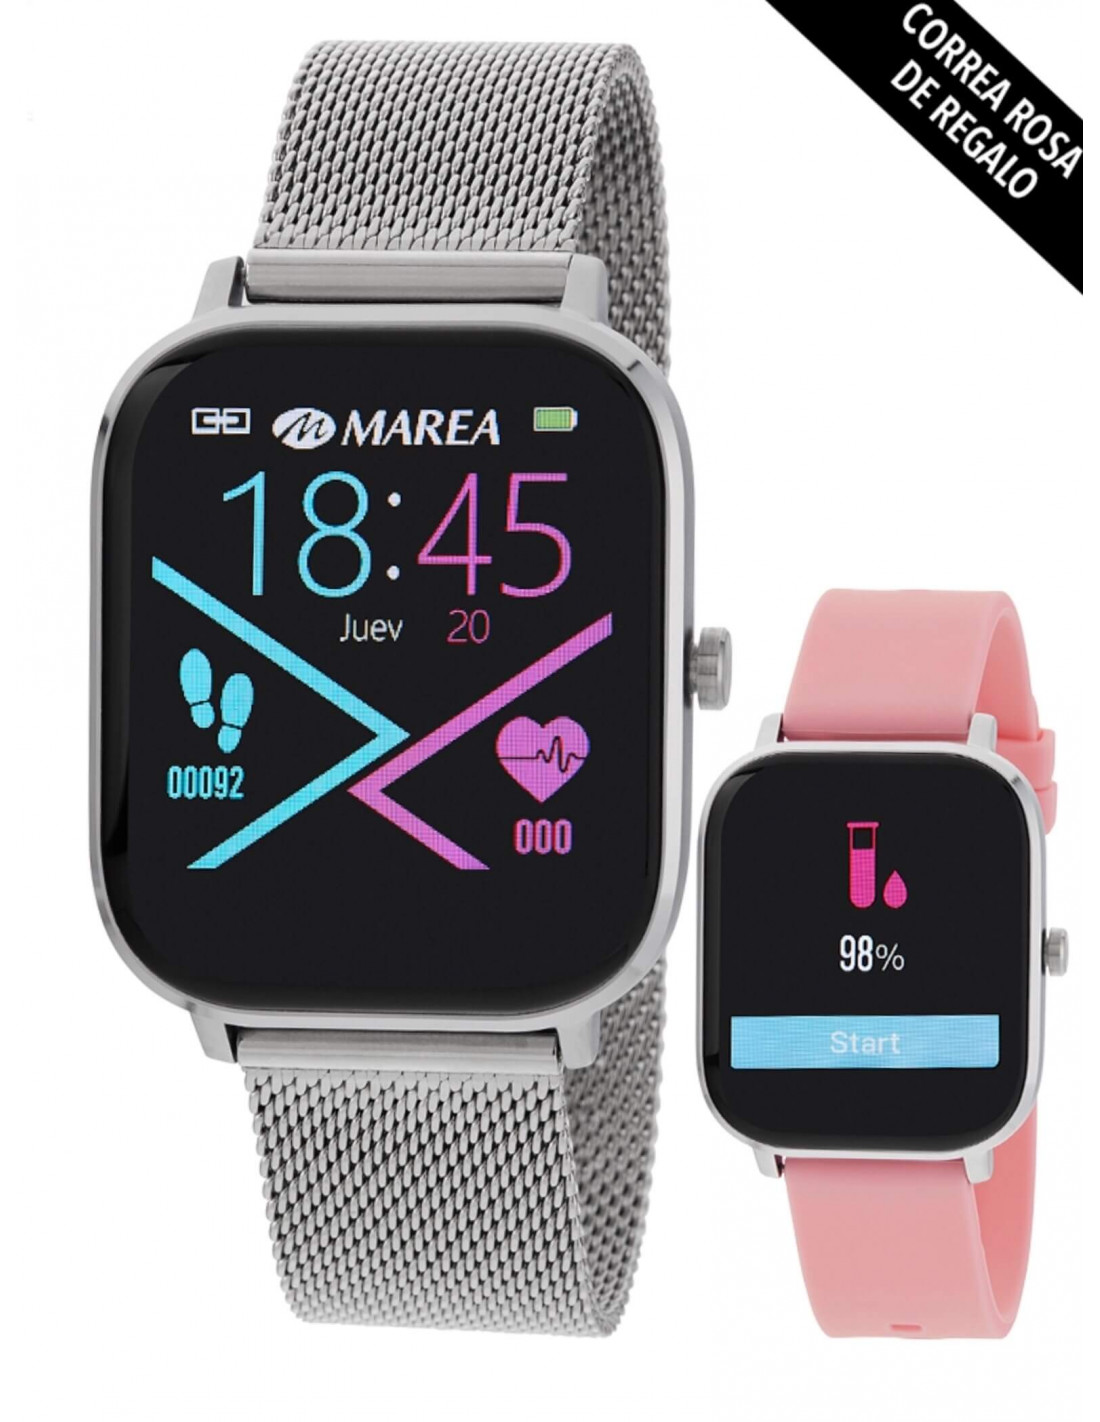 Reloj Marea Smartwatch chico Habla por Bluetooth